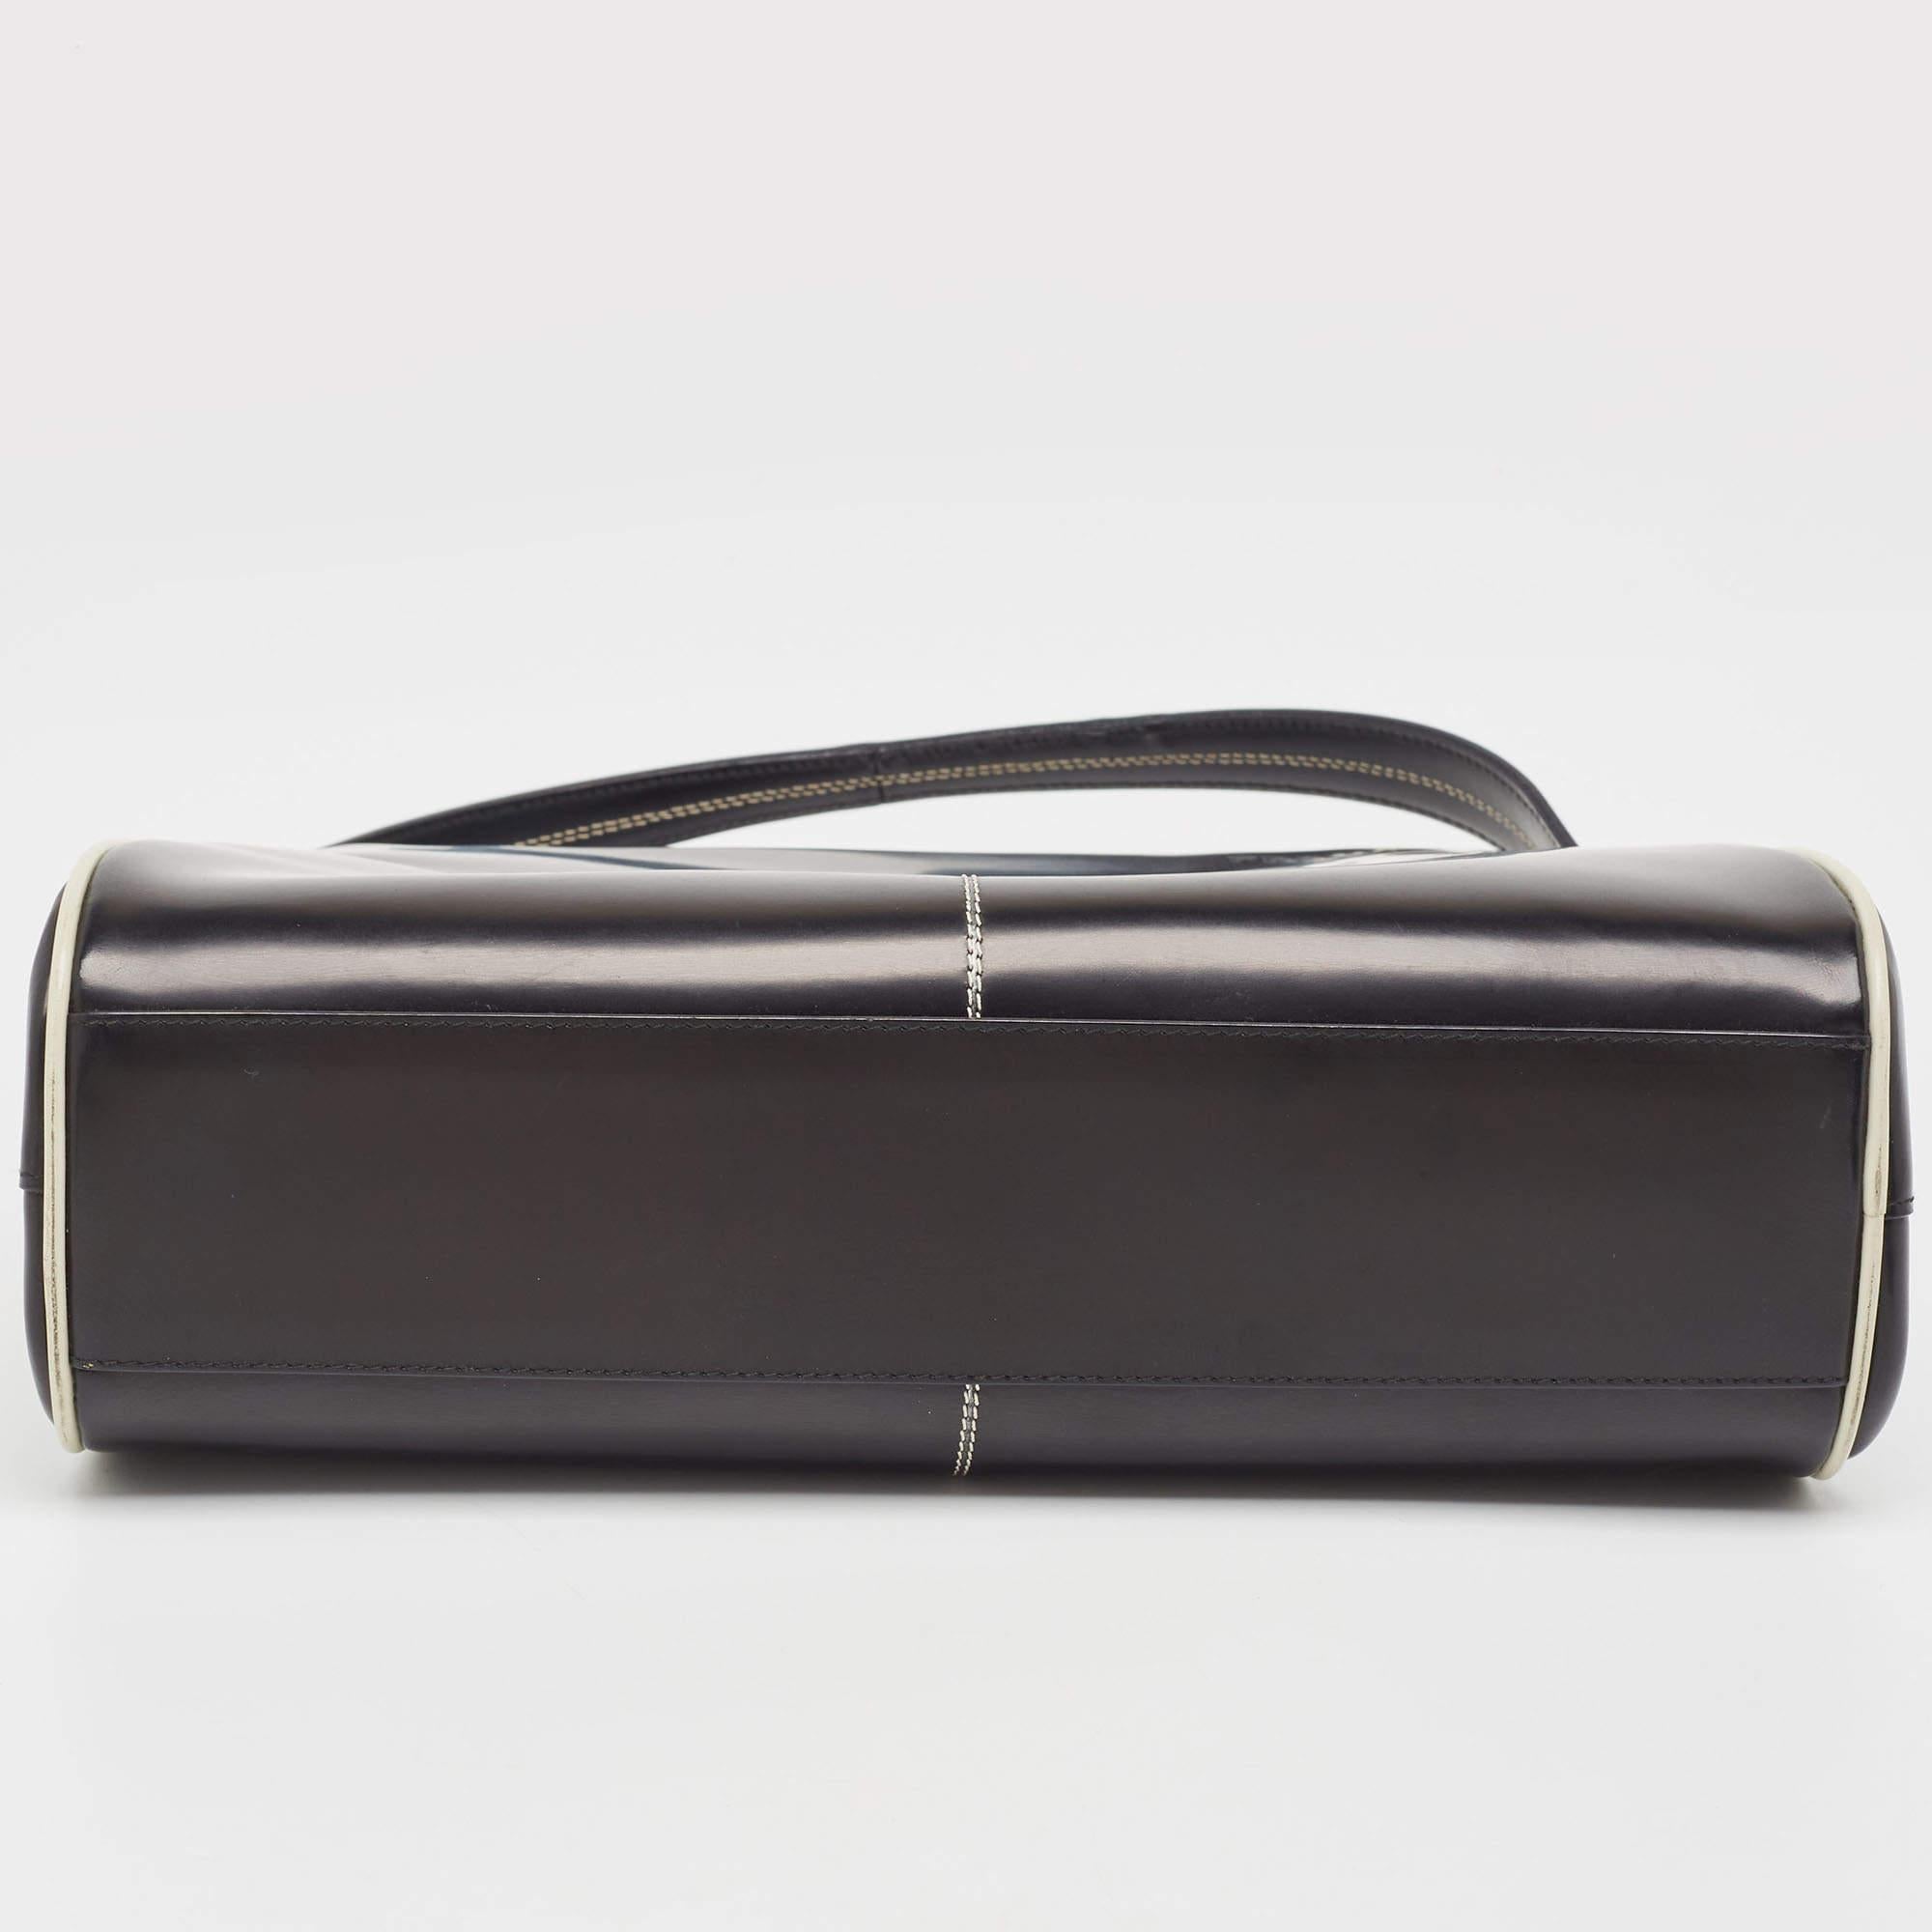 Prada Black/White Patent Leather Frame Top Handle Bag 2